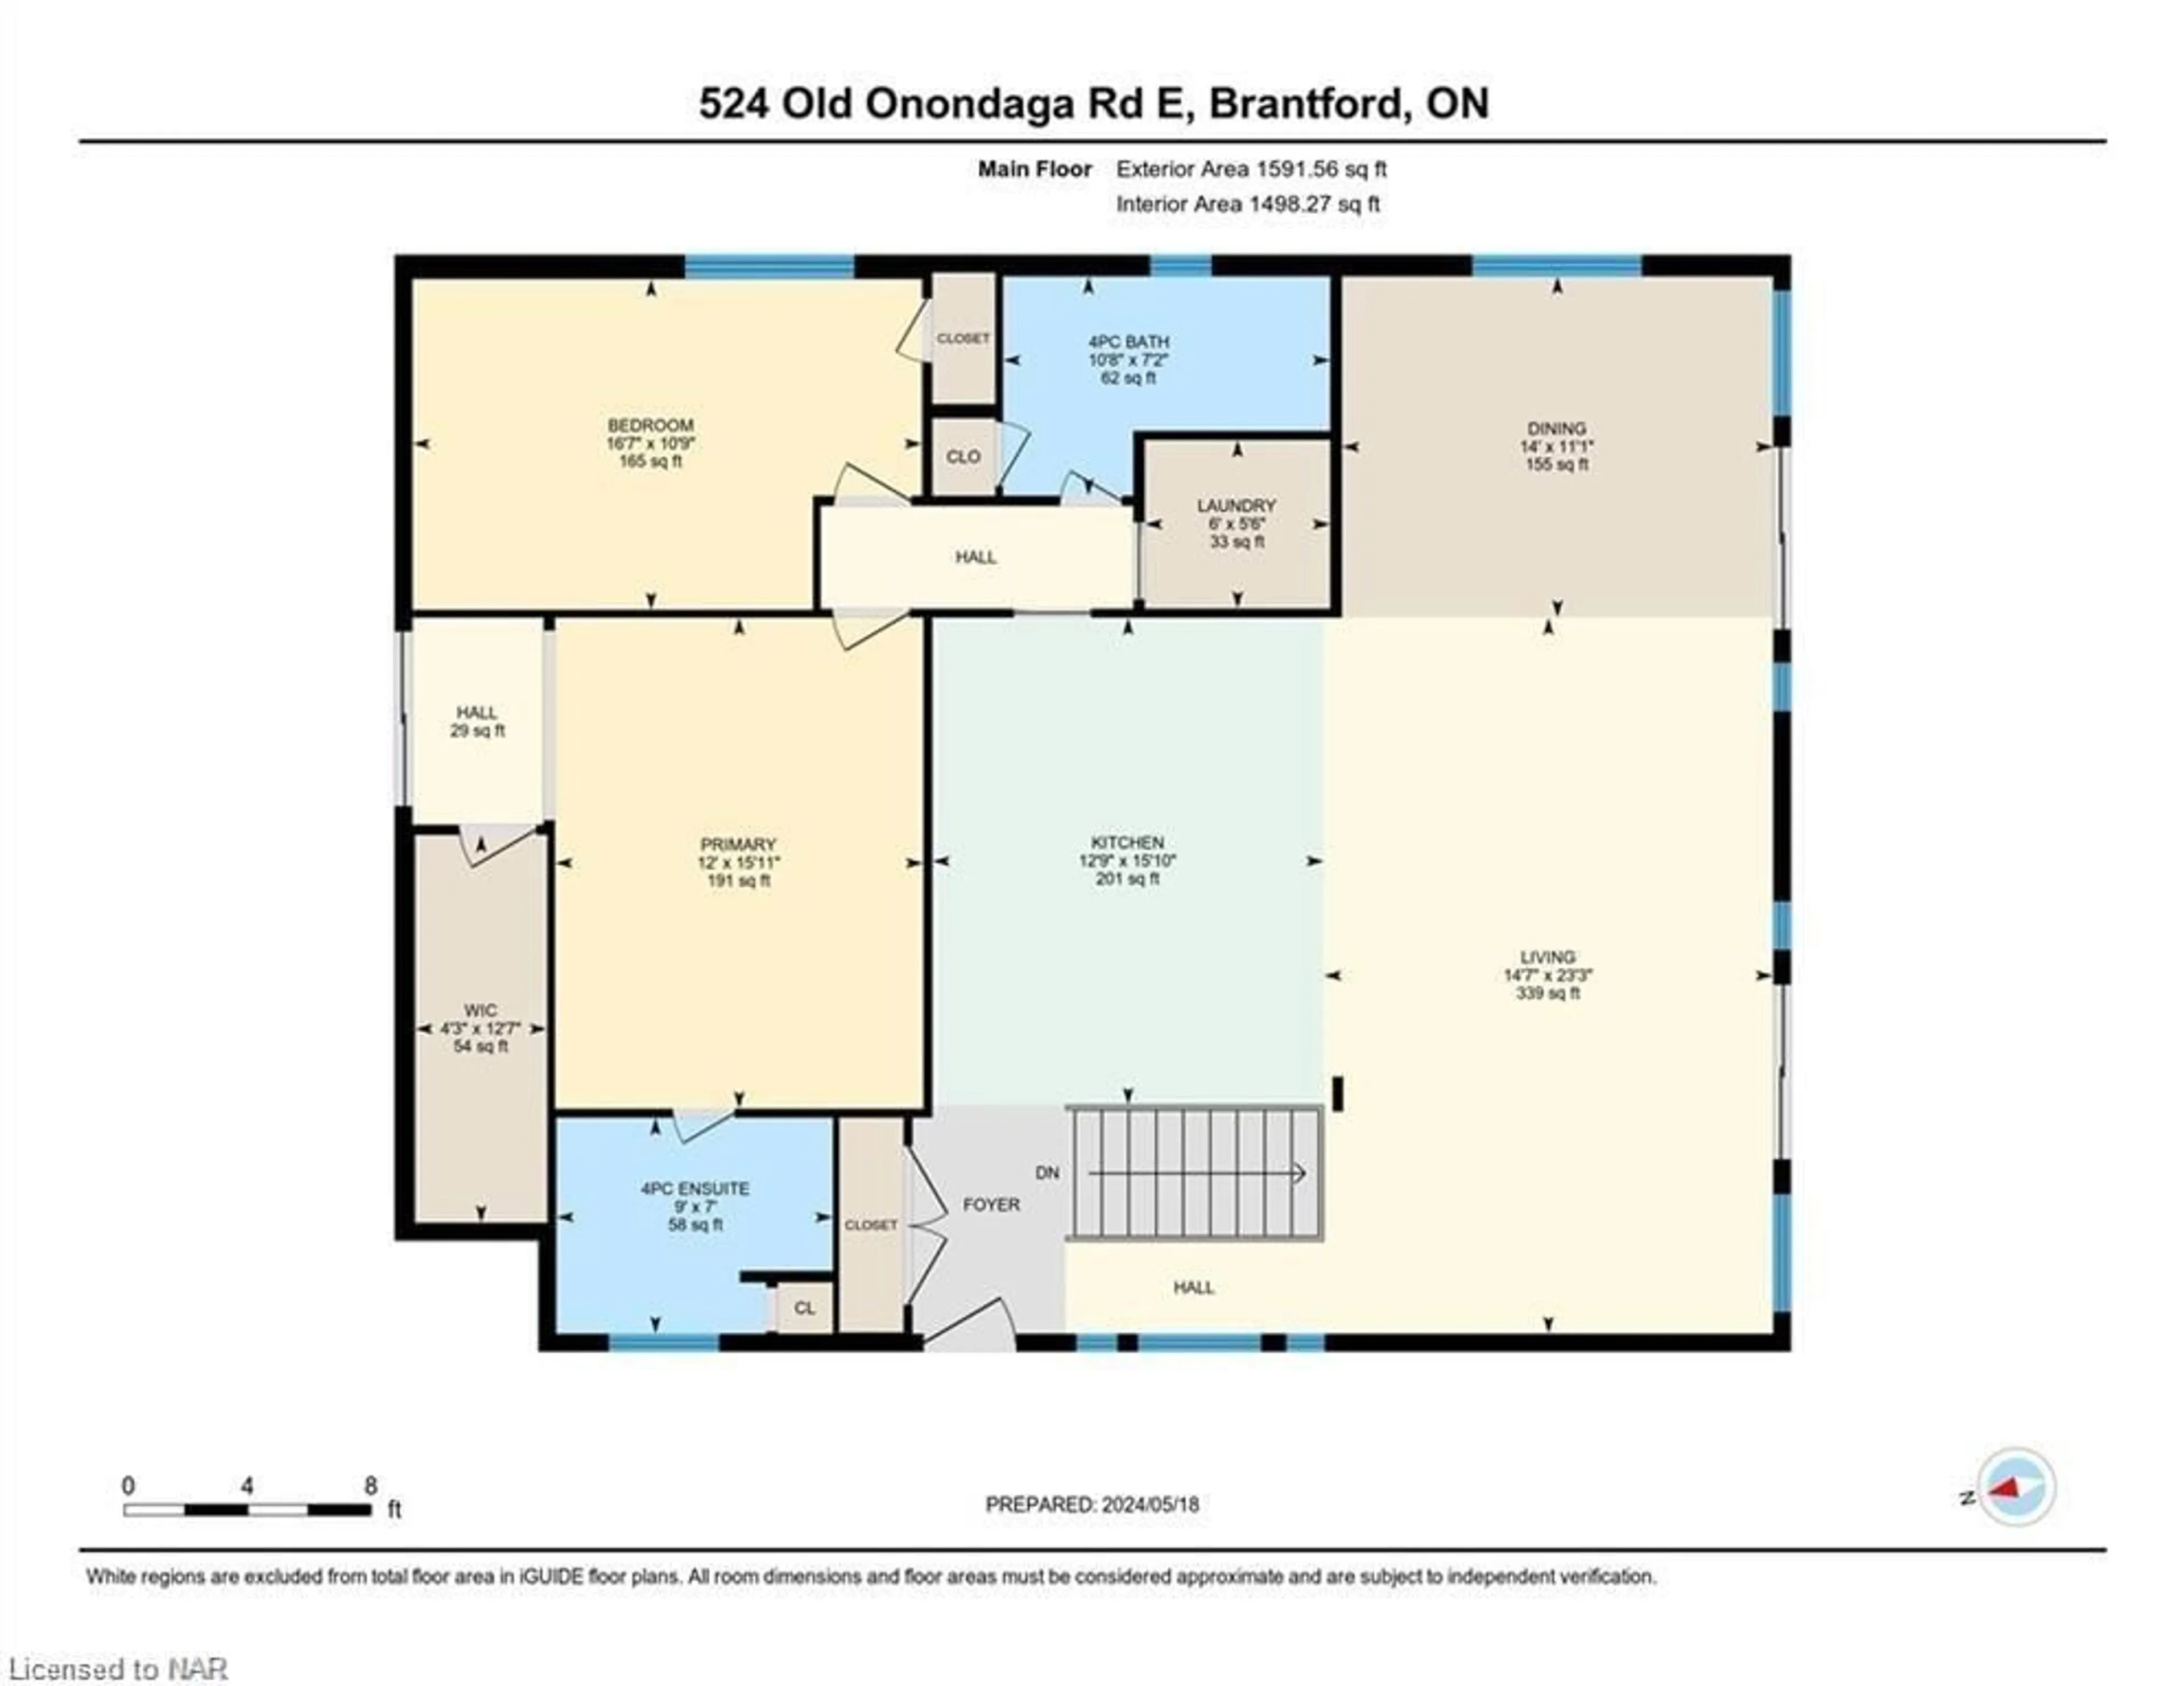 Floor plan for 524 Old Onondaga Rd, Brantford Ontario N3T 5L4